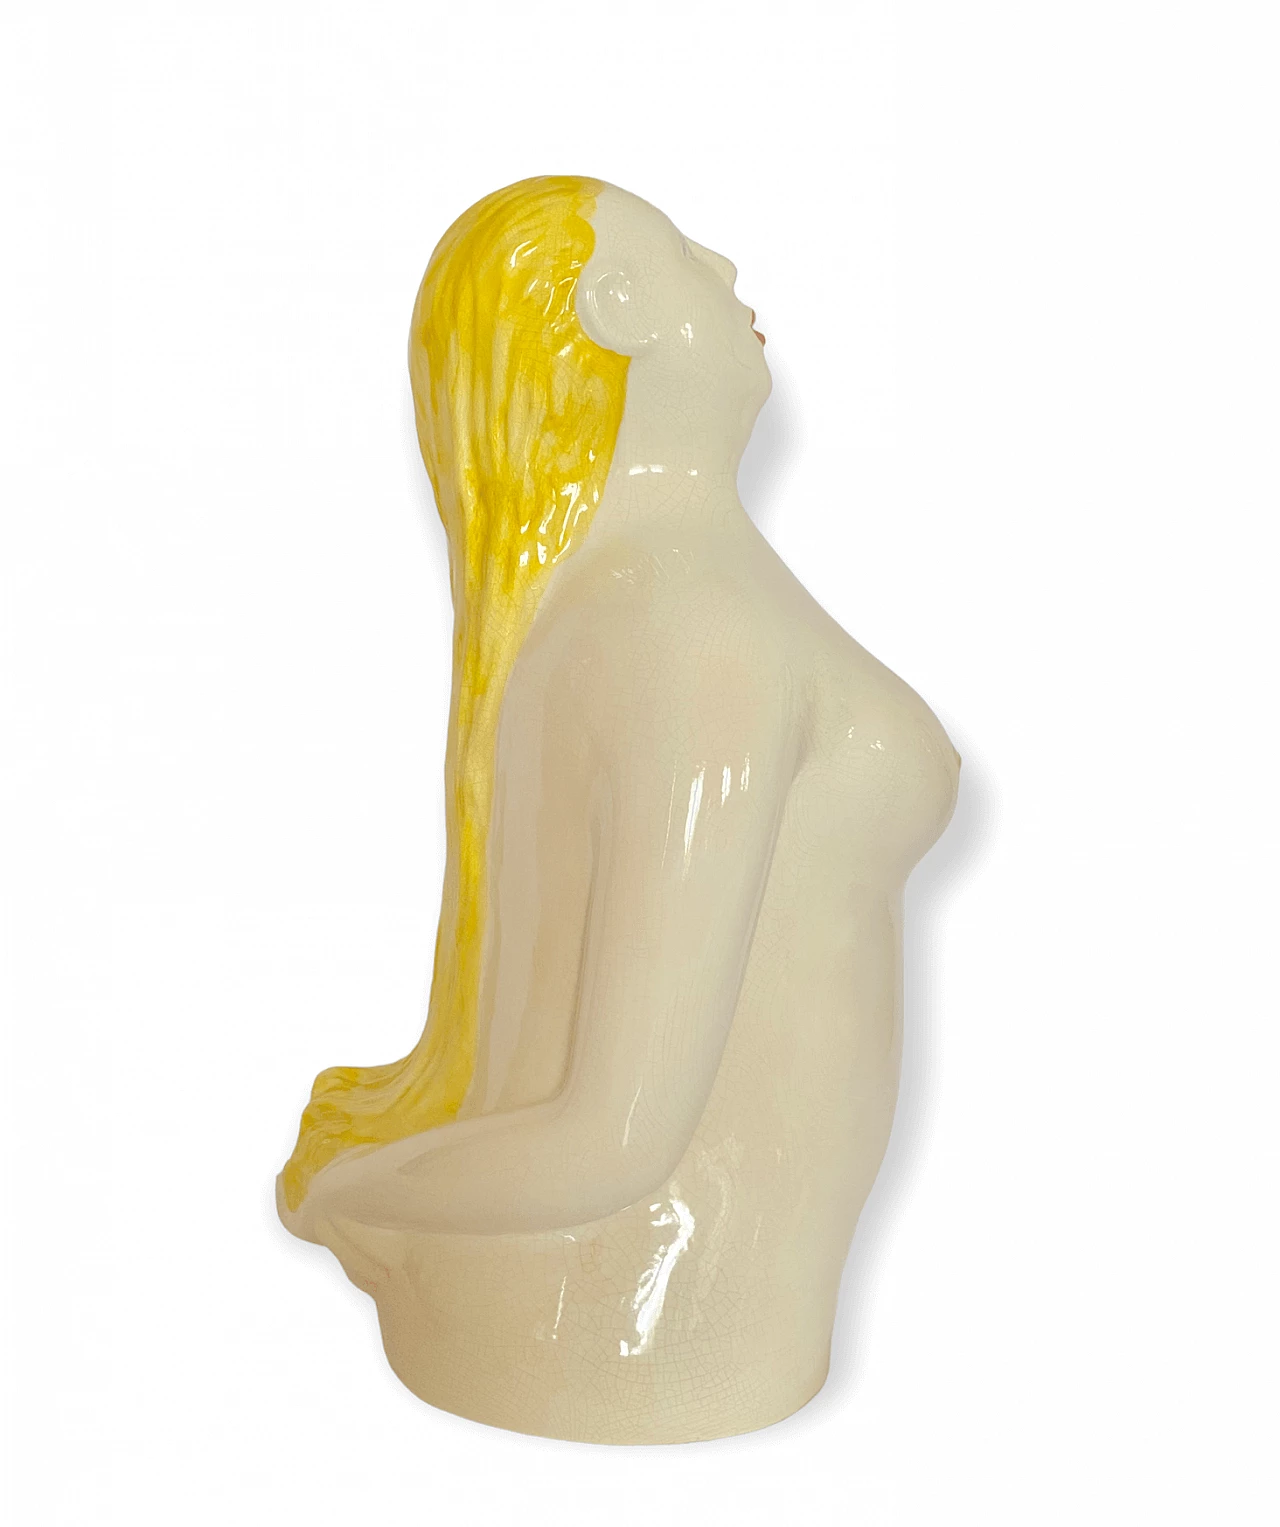 Ugo La Pietra, Bather, glazed ceramic sculpture, 1990 26